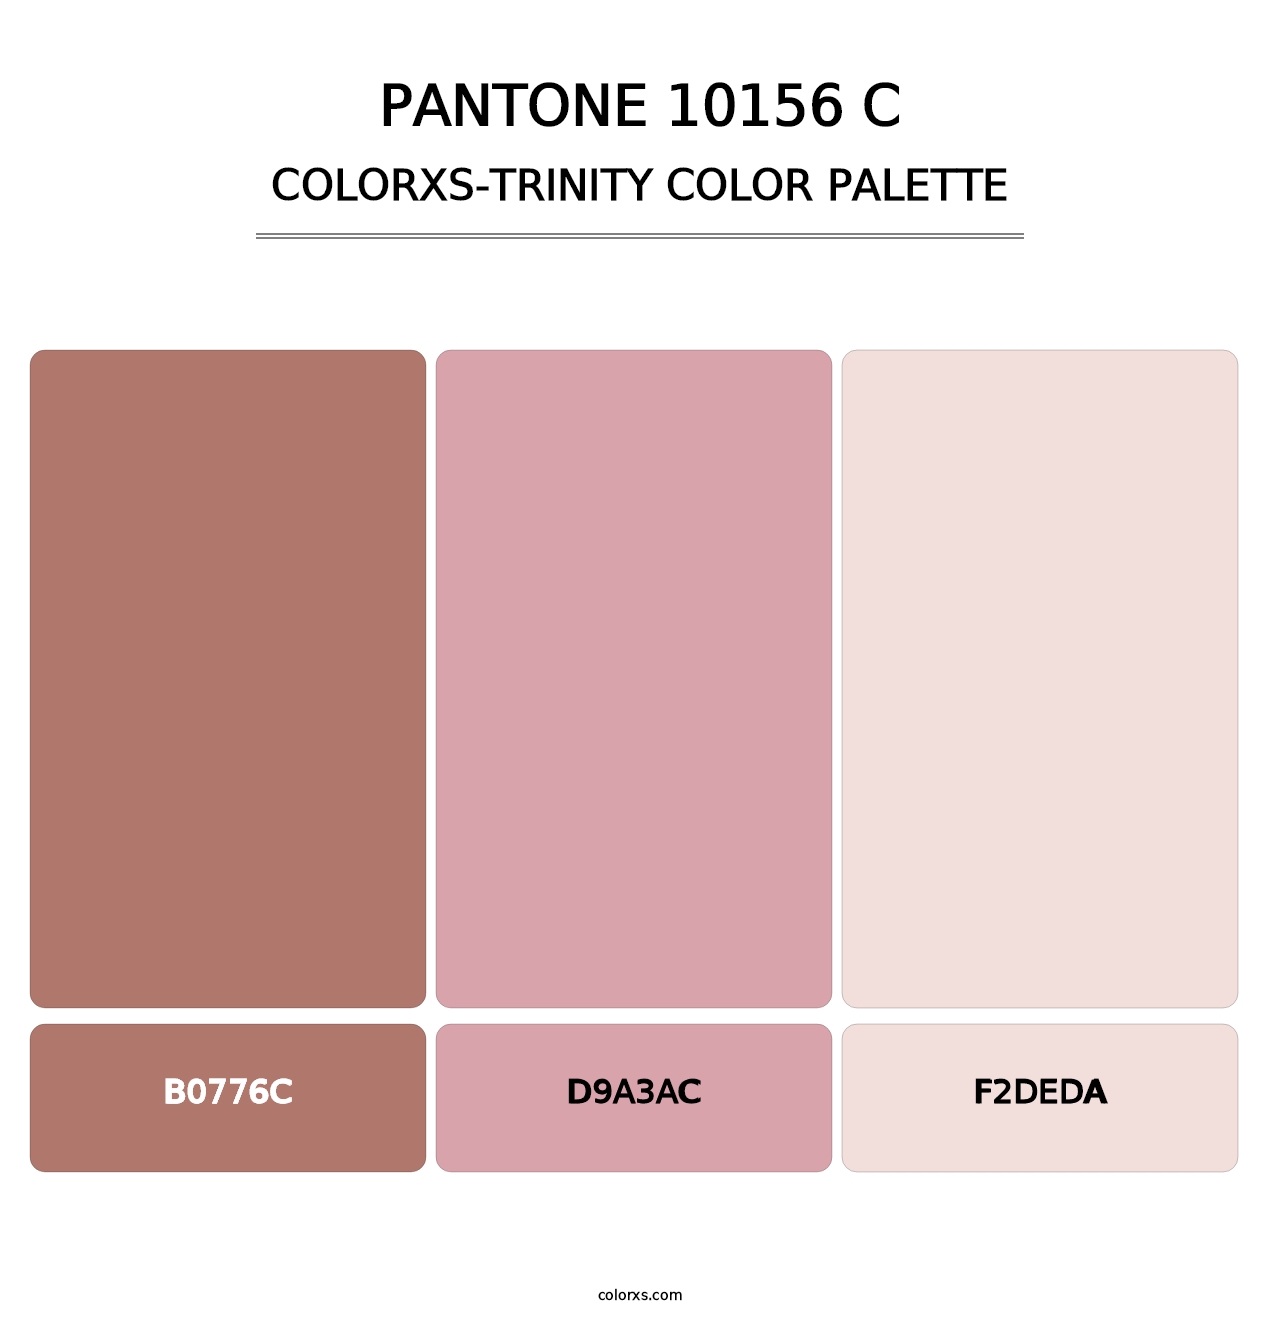 PANTONE 10156 C - Colorxs Trinity Palette